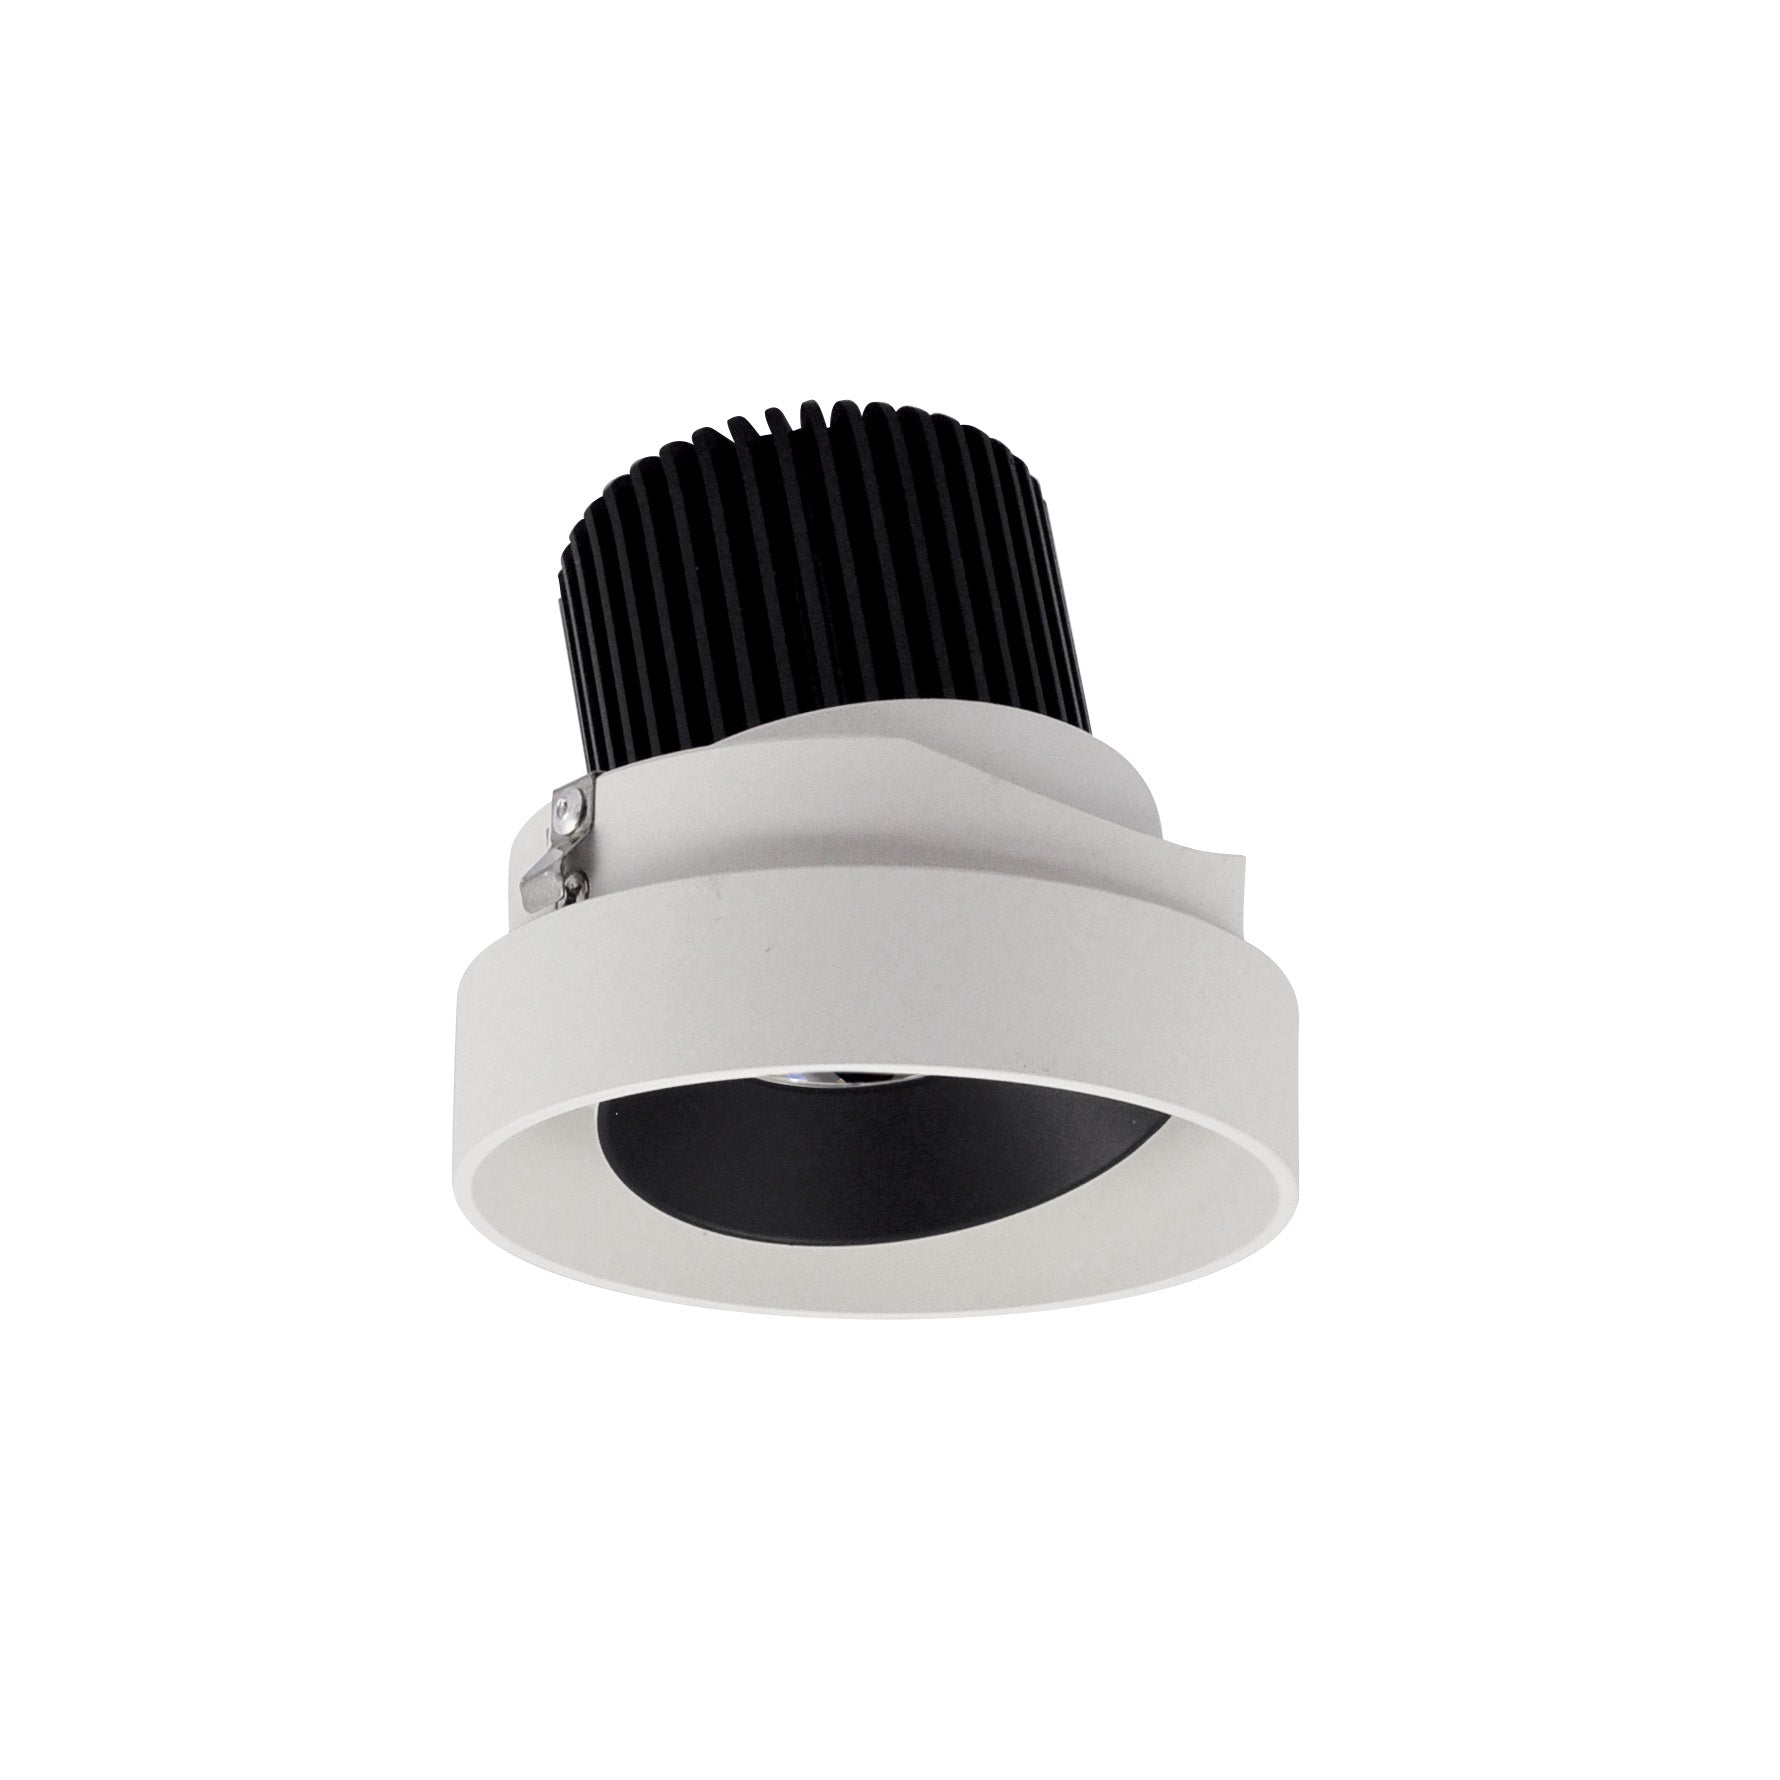 Nora Lighting NIO-4RTLA40QBW 4" Iolite LED Round Trimless Adjustable, 10-Degree Optic, 800lm / 12W, 4000K - Black Adjustable / White Reflector